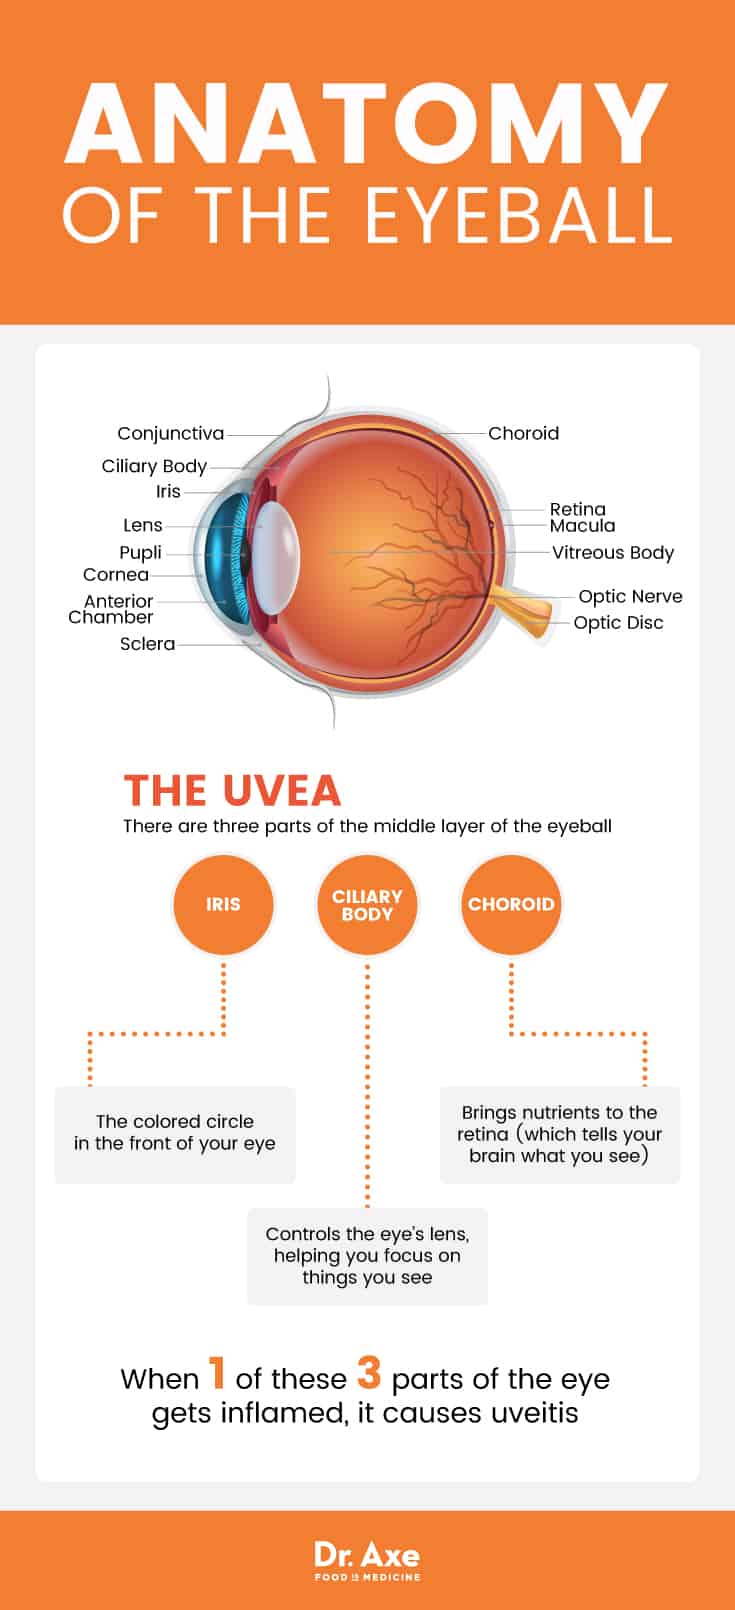 Uveitis & anatomy of the eyeball - Dr. Axe